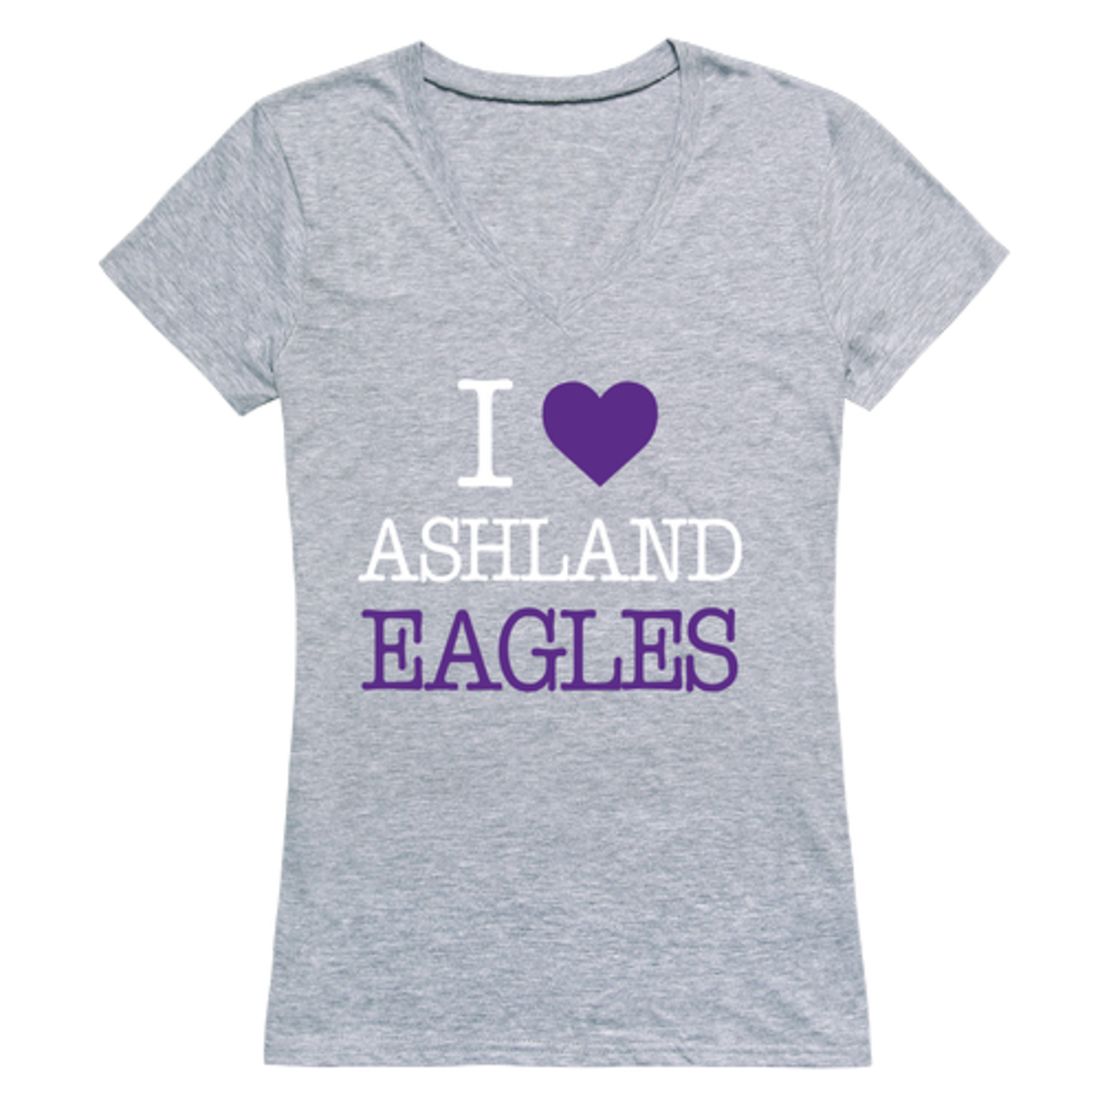 I Love Ashland University Eagles Womens T-Shirt Tee